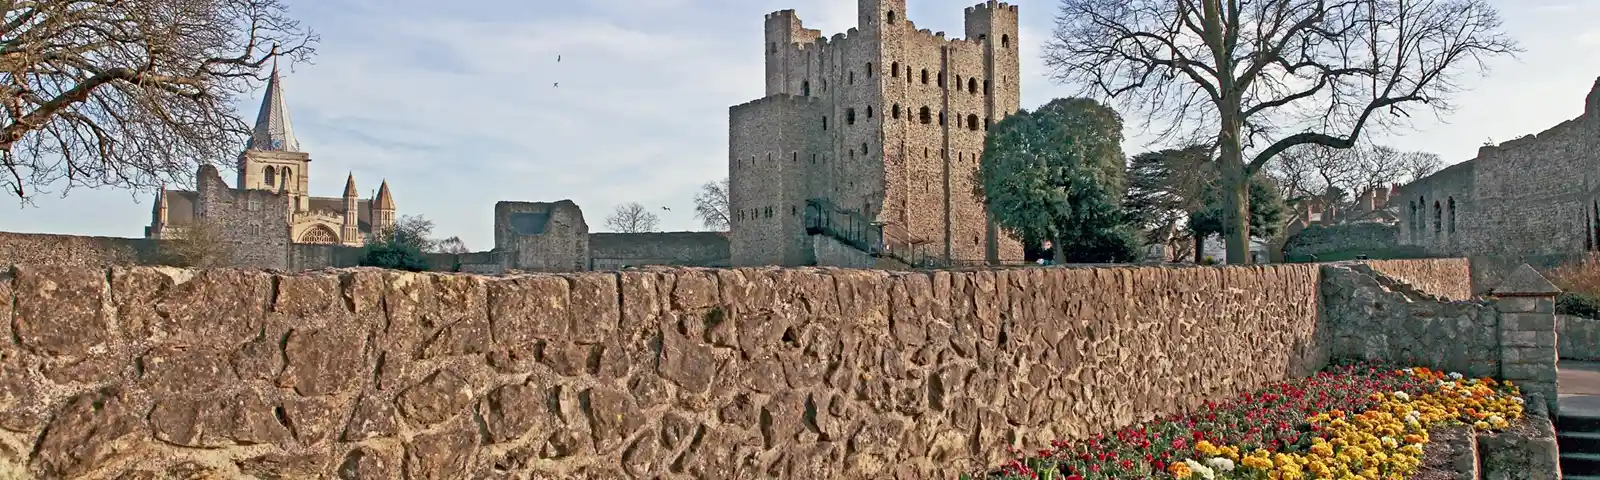 Rochester_Castle_wall in spring.jpg